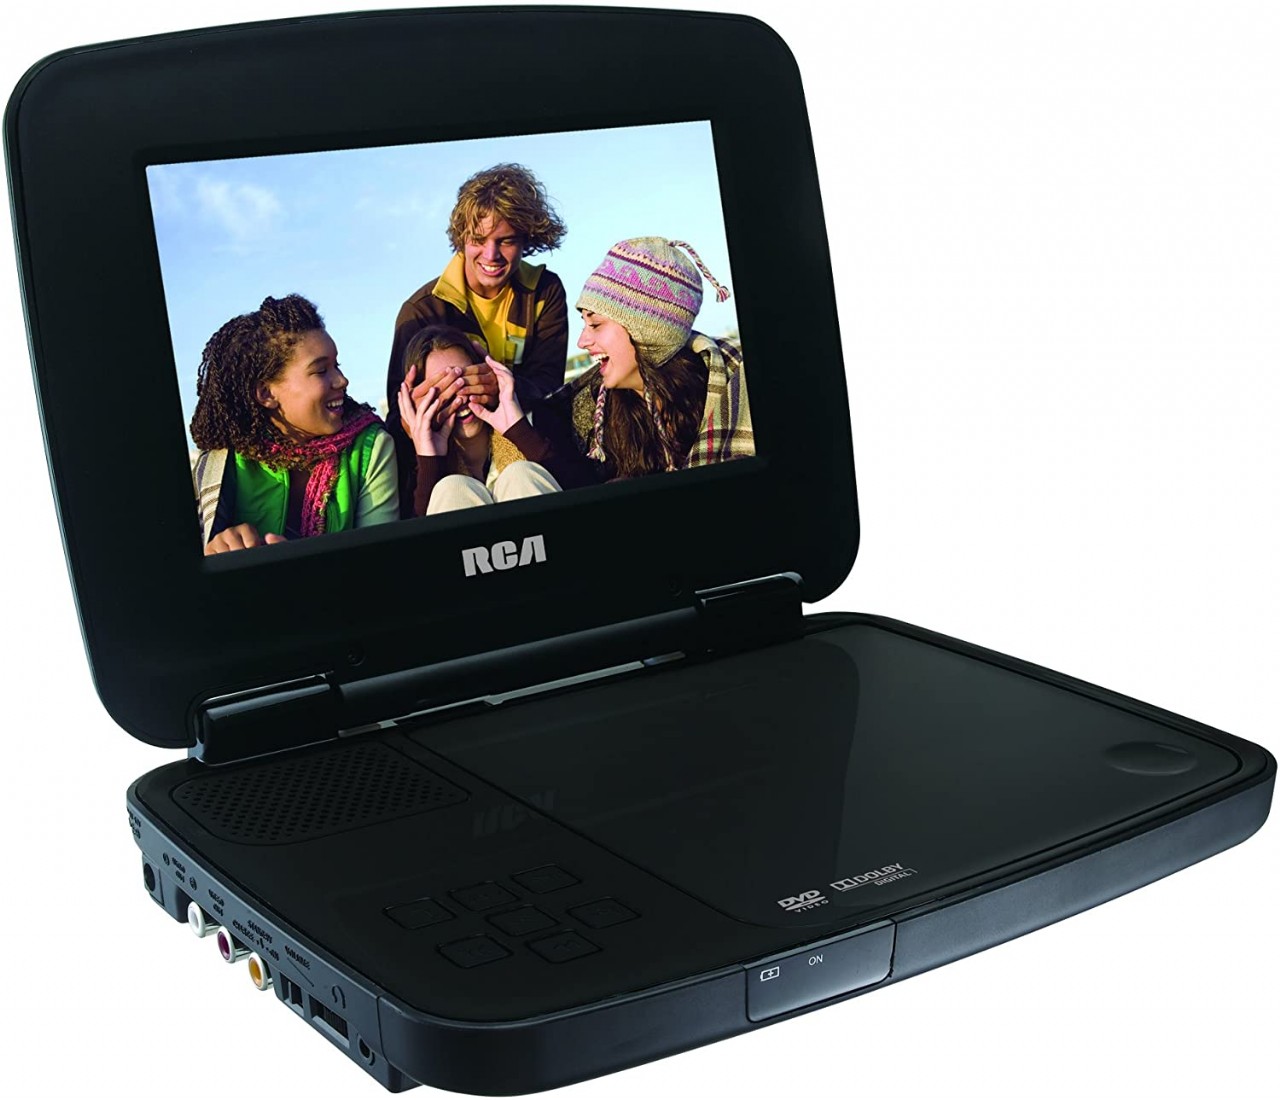 RCA DRC99371EB Portable DVD Player